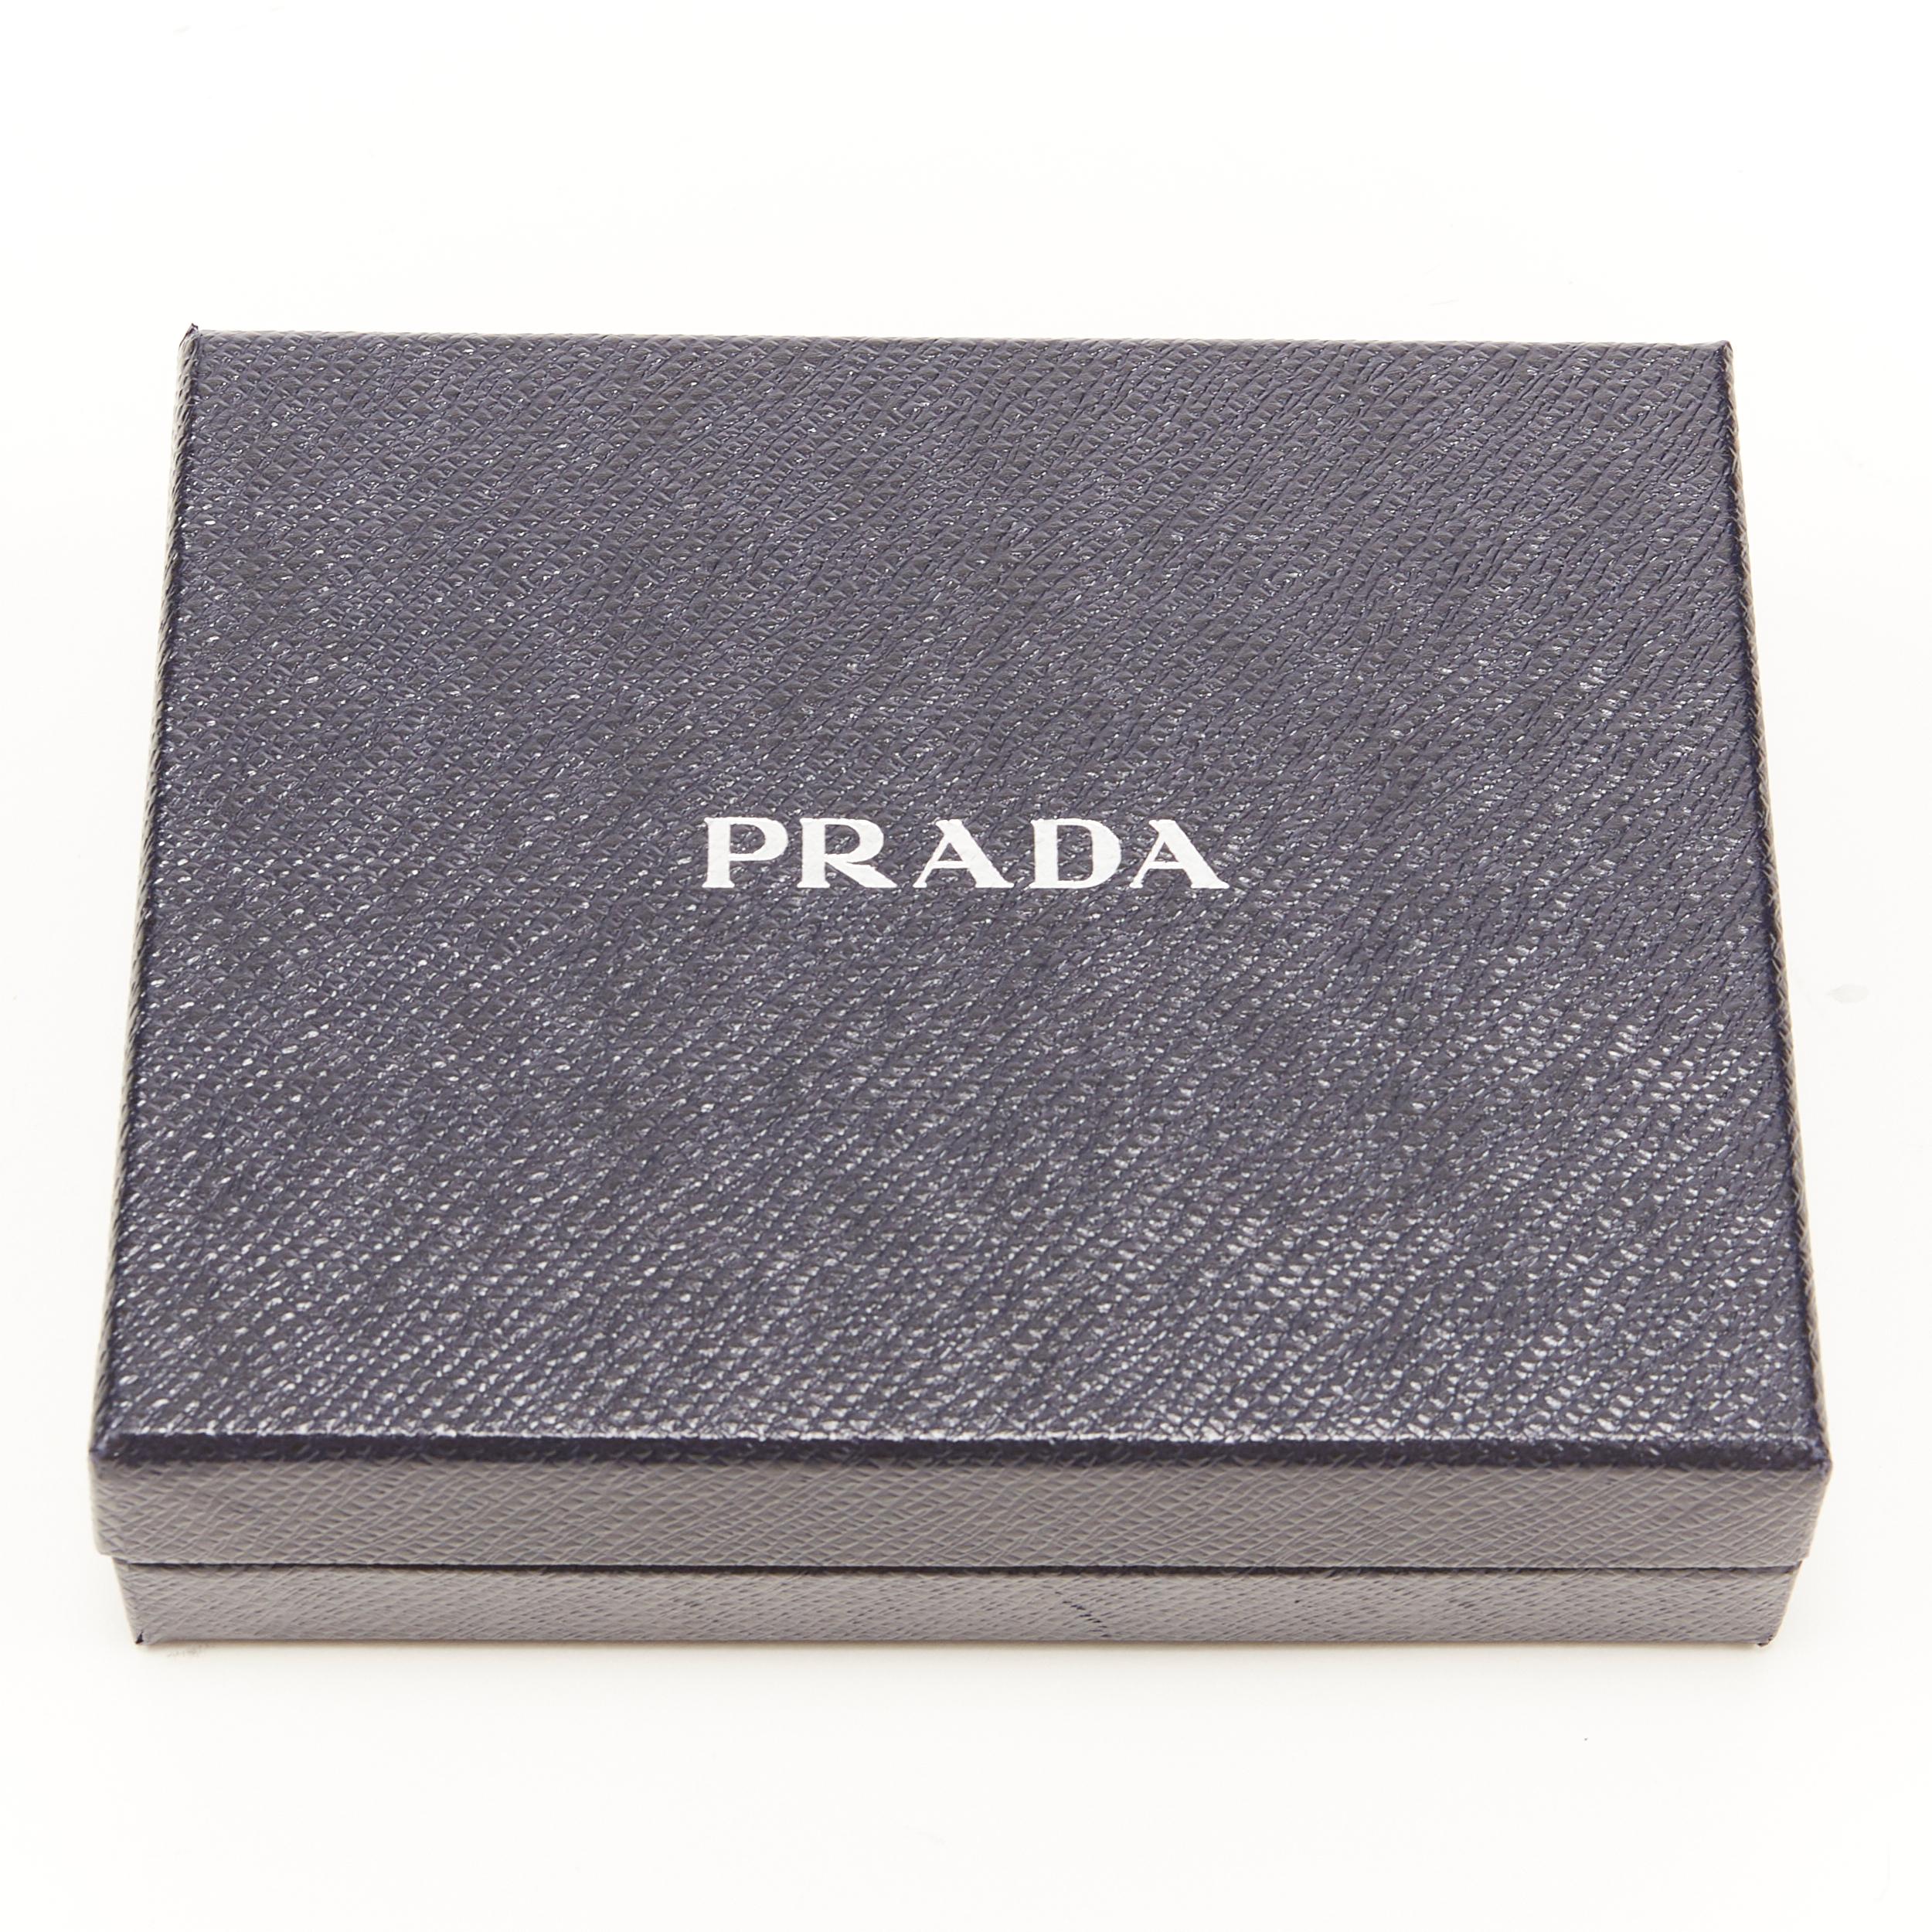 Gold new PRADA metallic gold saffiano leather triangle logo crossbody circle bag